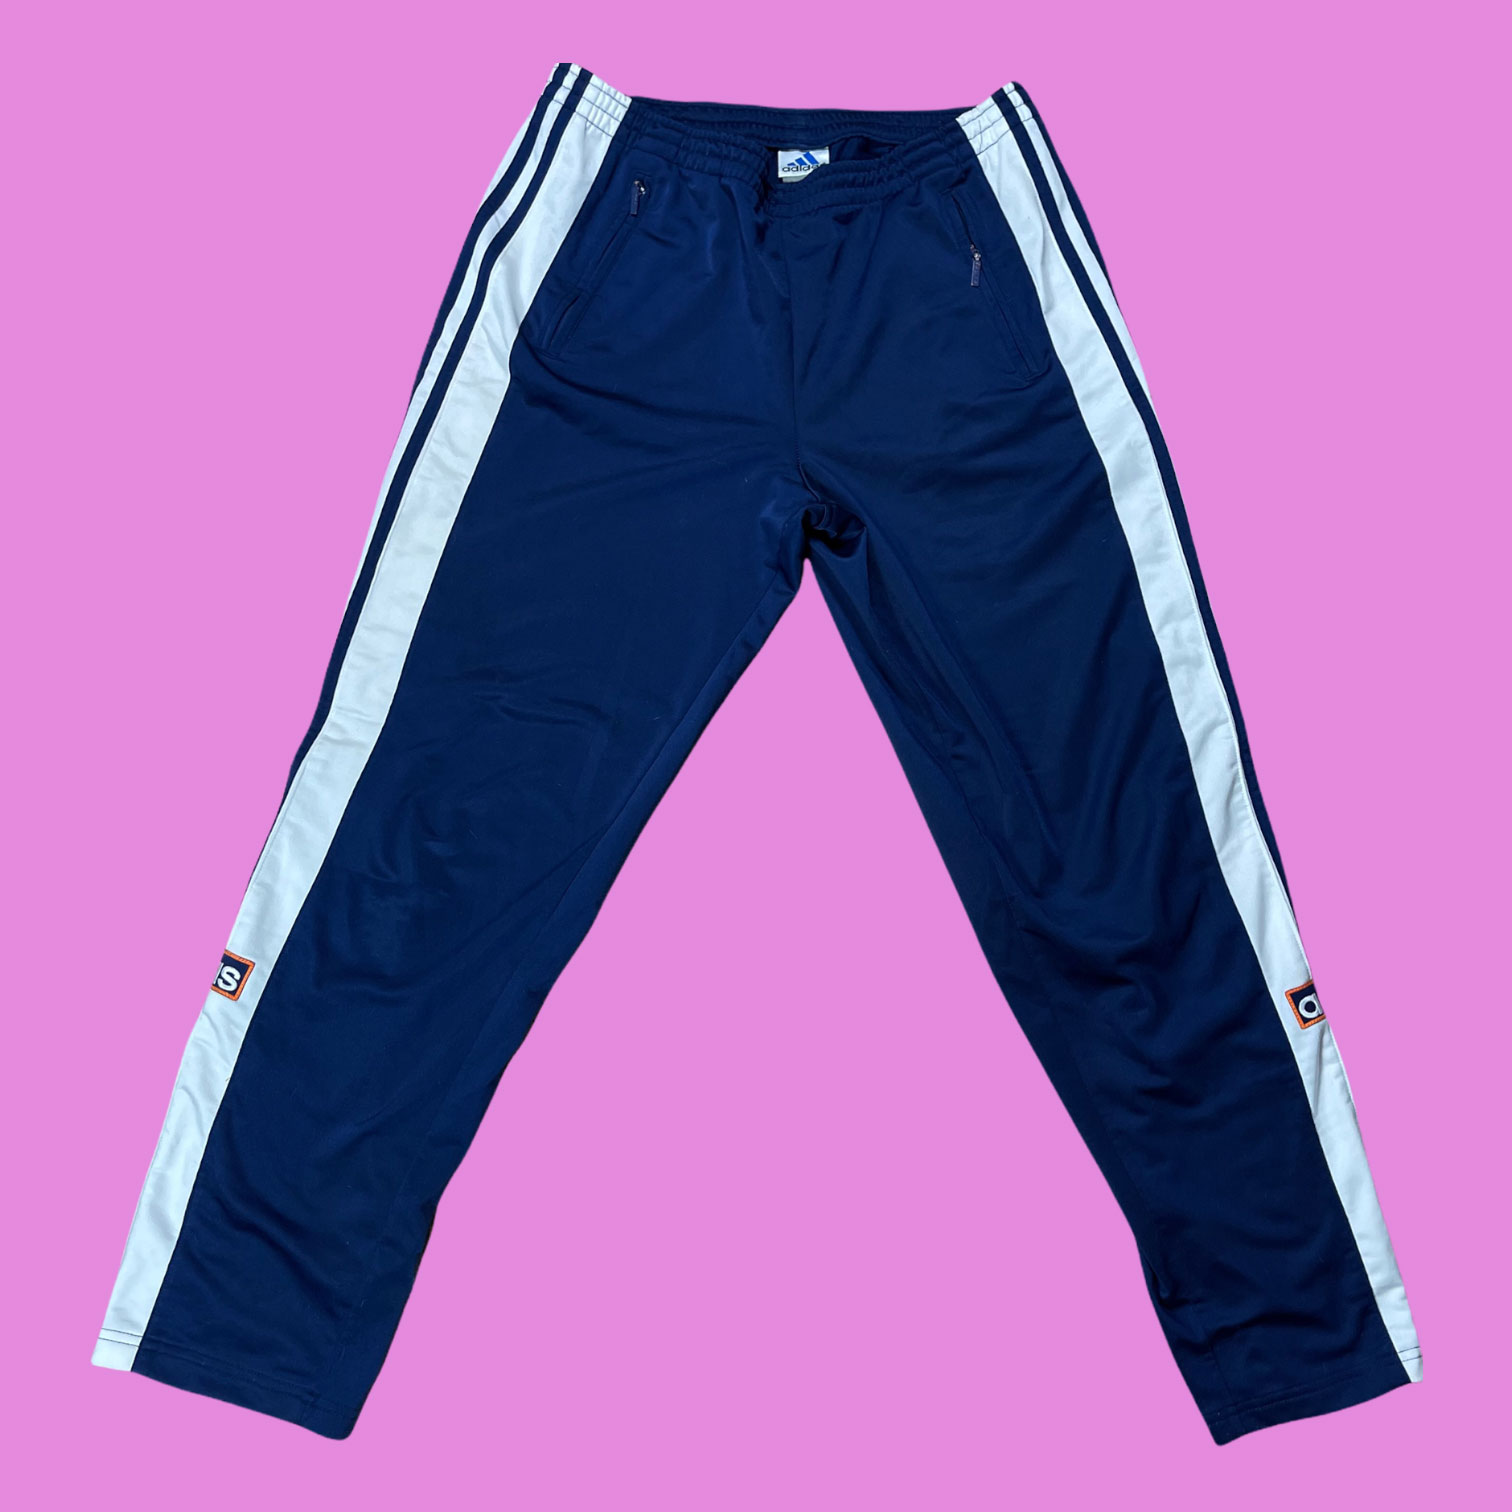 90s Adidas Button/Popper Pants ⋆ ALMO vintage